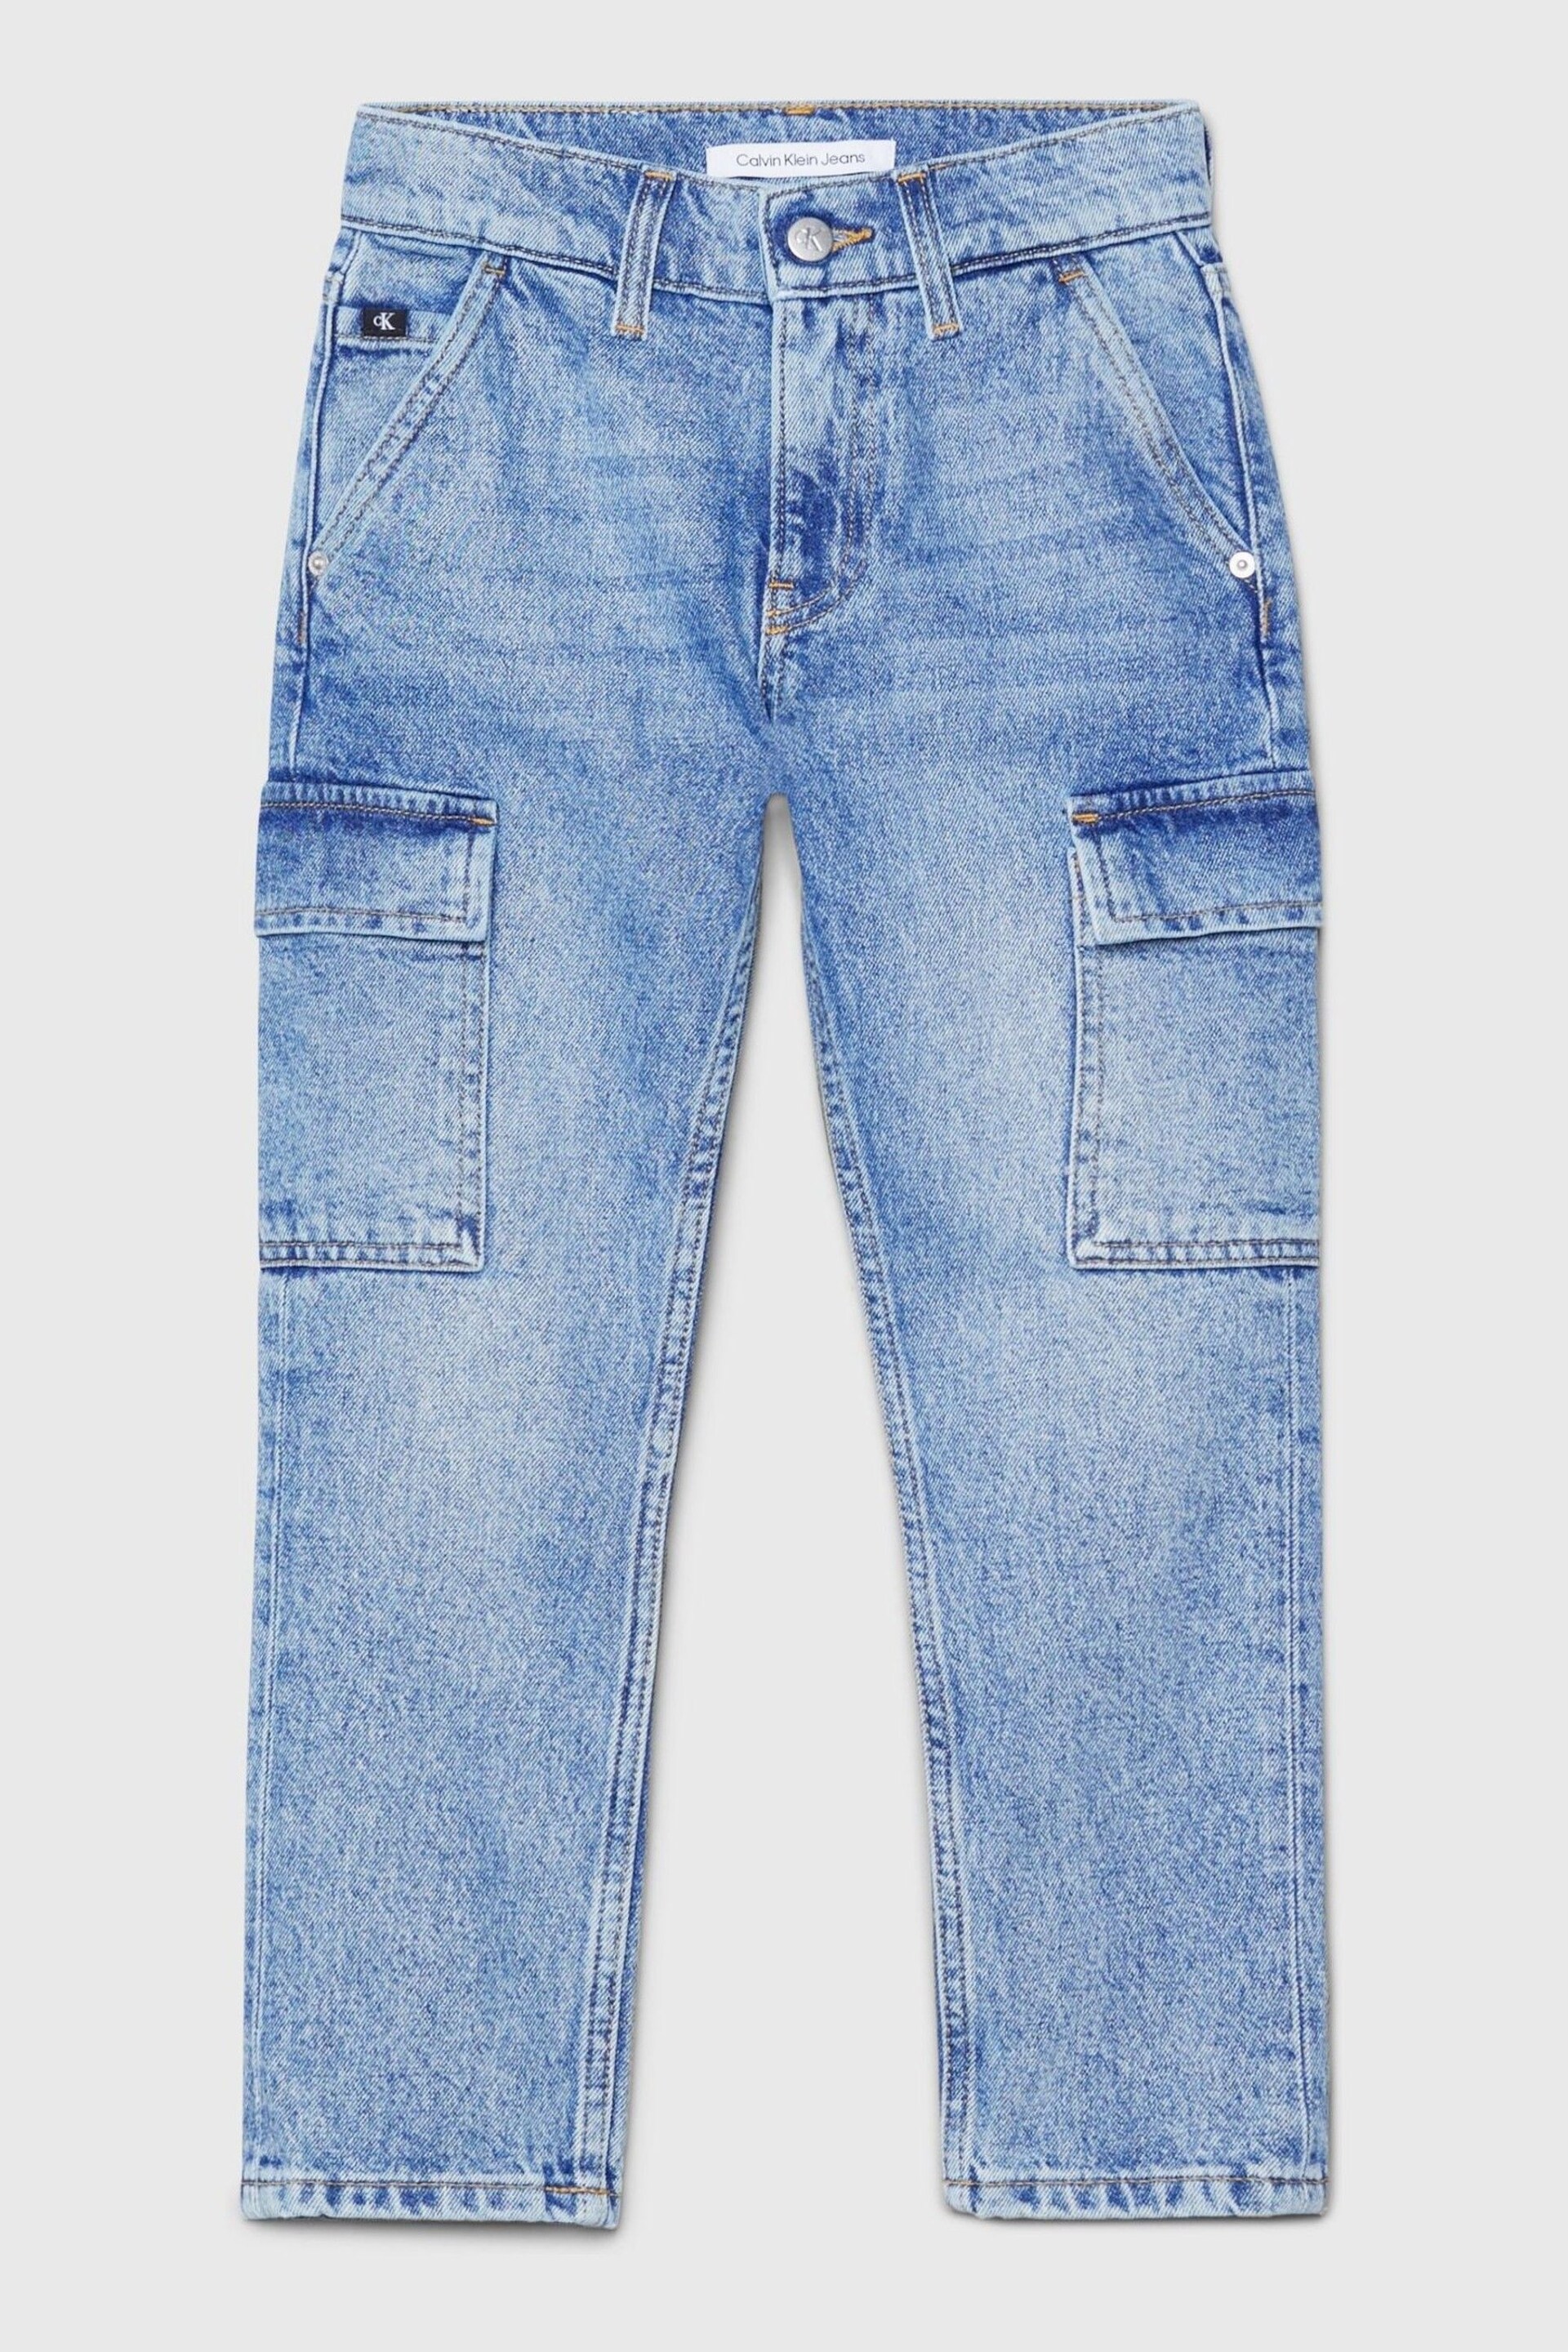 Calvin Klein Jeans Blue Cargo Denim Jeans - Image 4 of 4